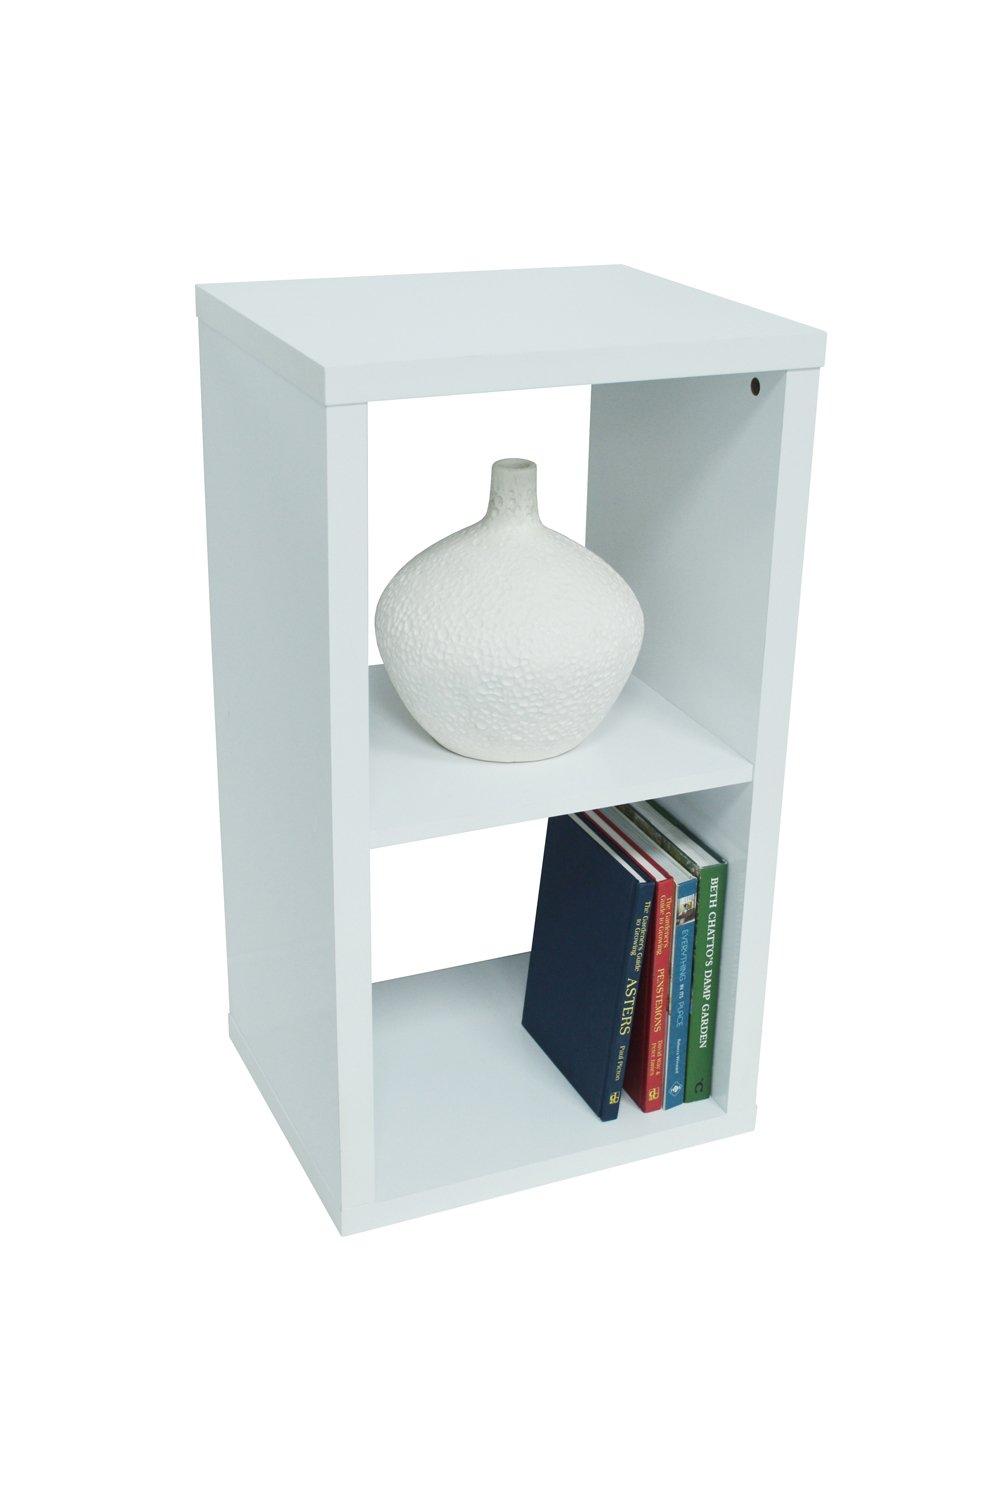 'Cube' - 2 Cubby Square Display Shelves / Vinyl Lp Record Storage - White